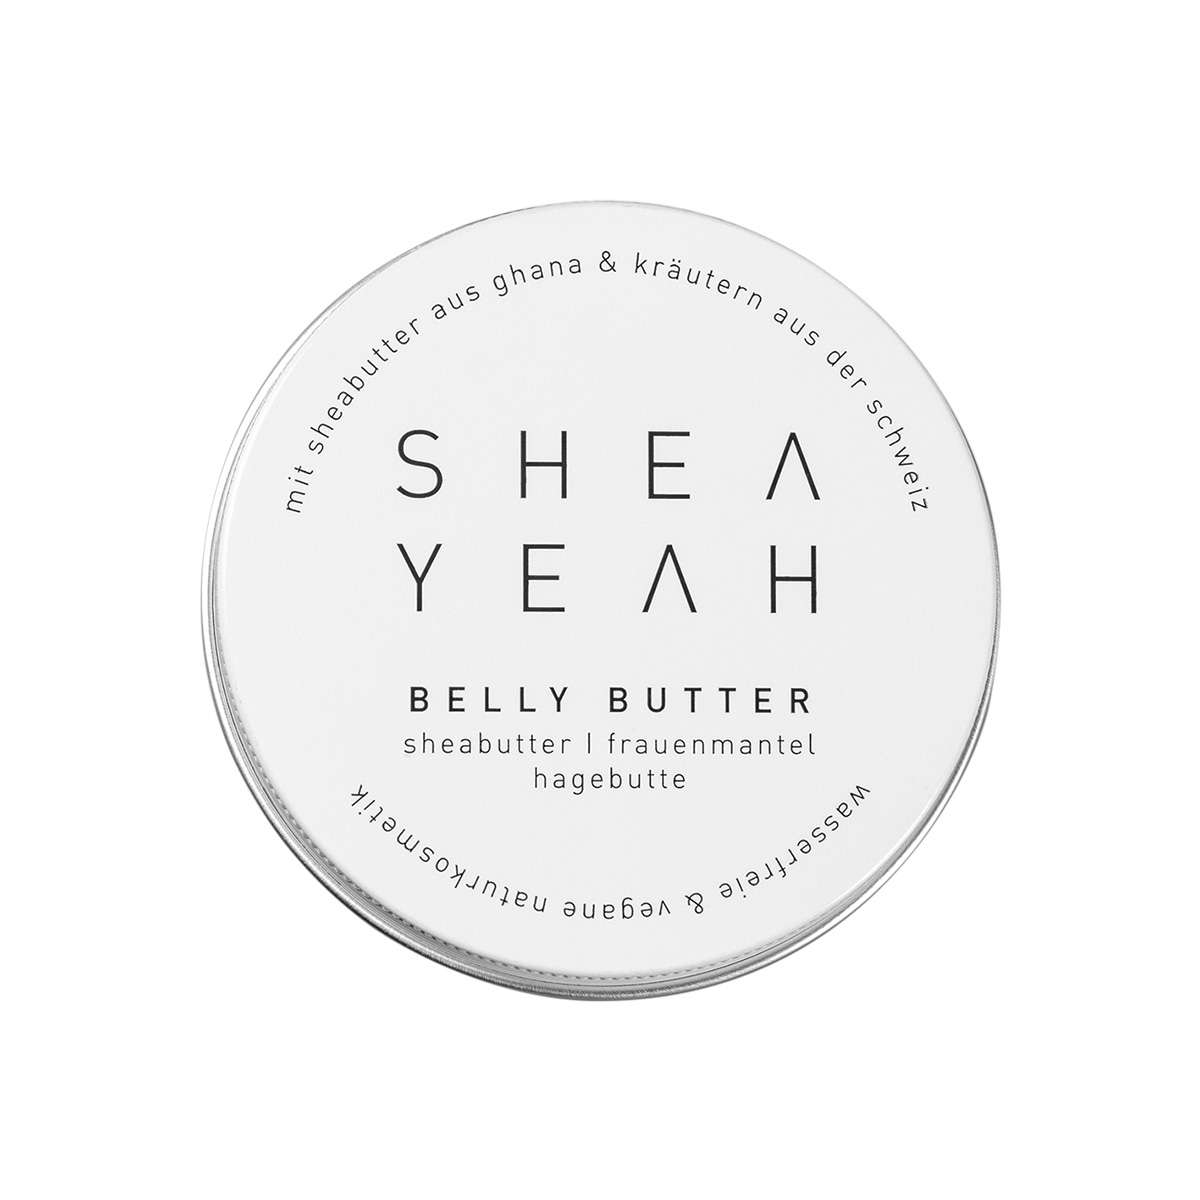 Shea Yeah Belly Butter für weiches & angenehmes Hautgefühl